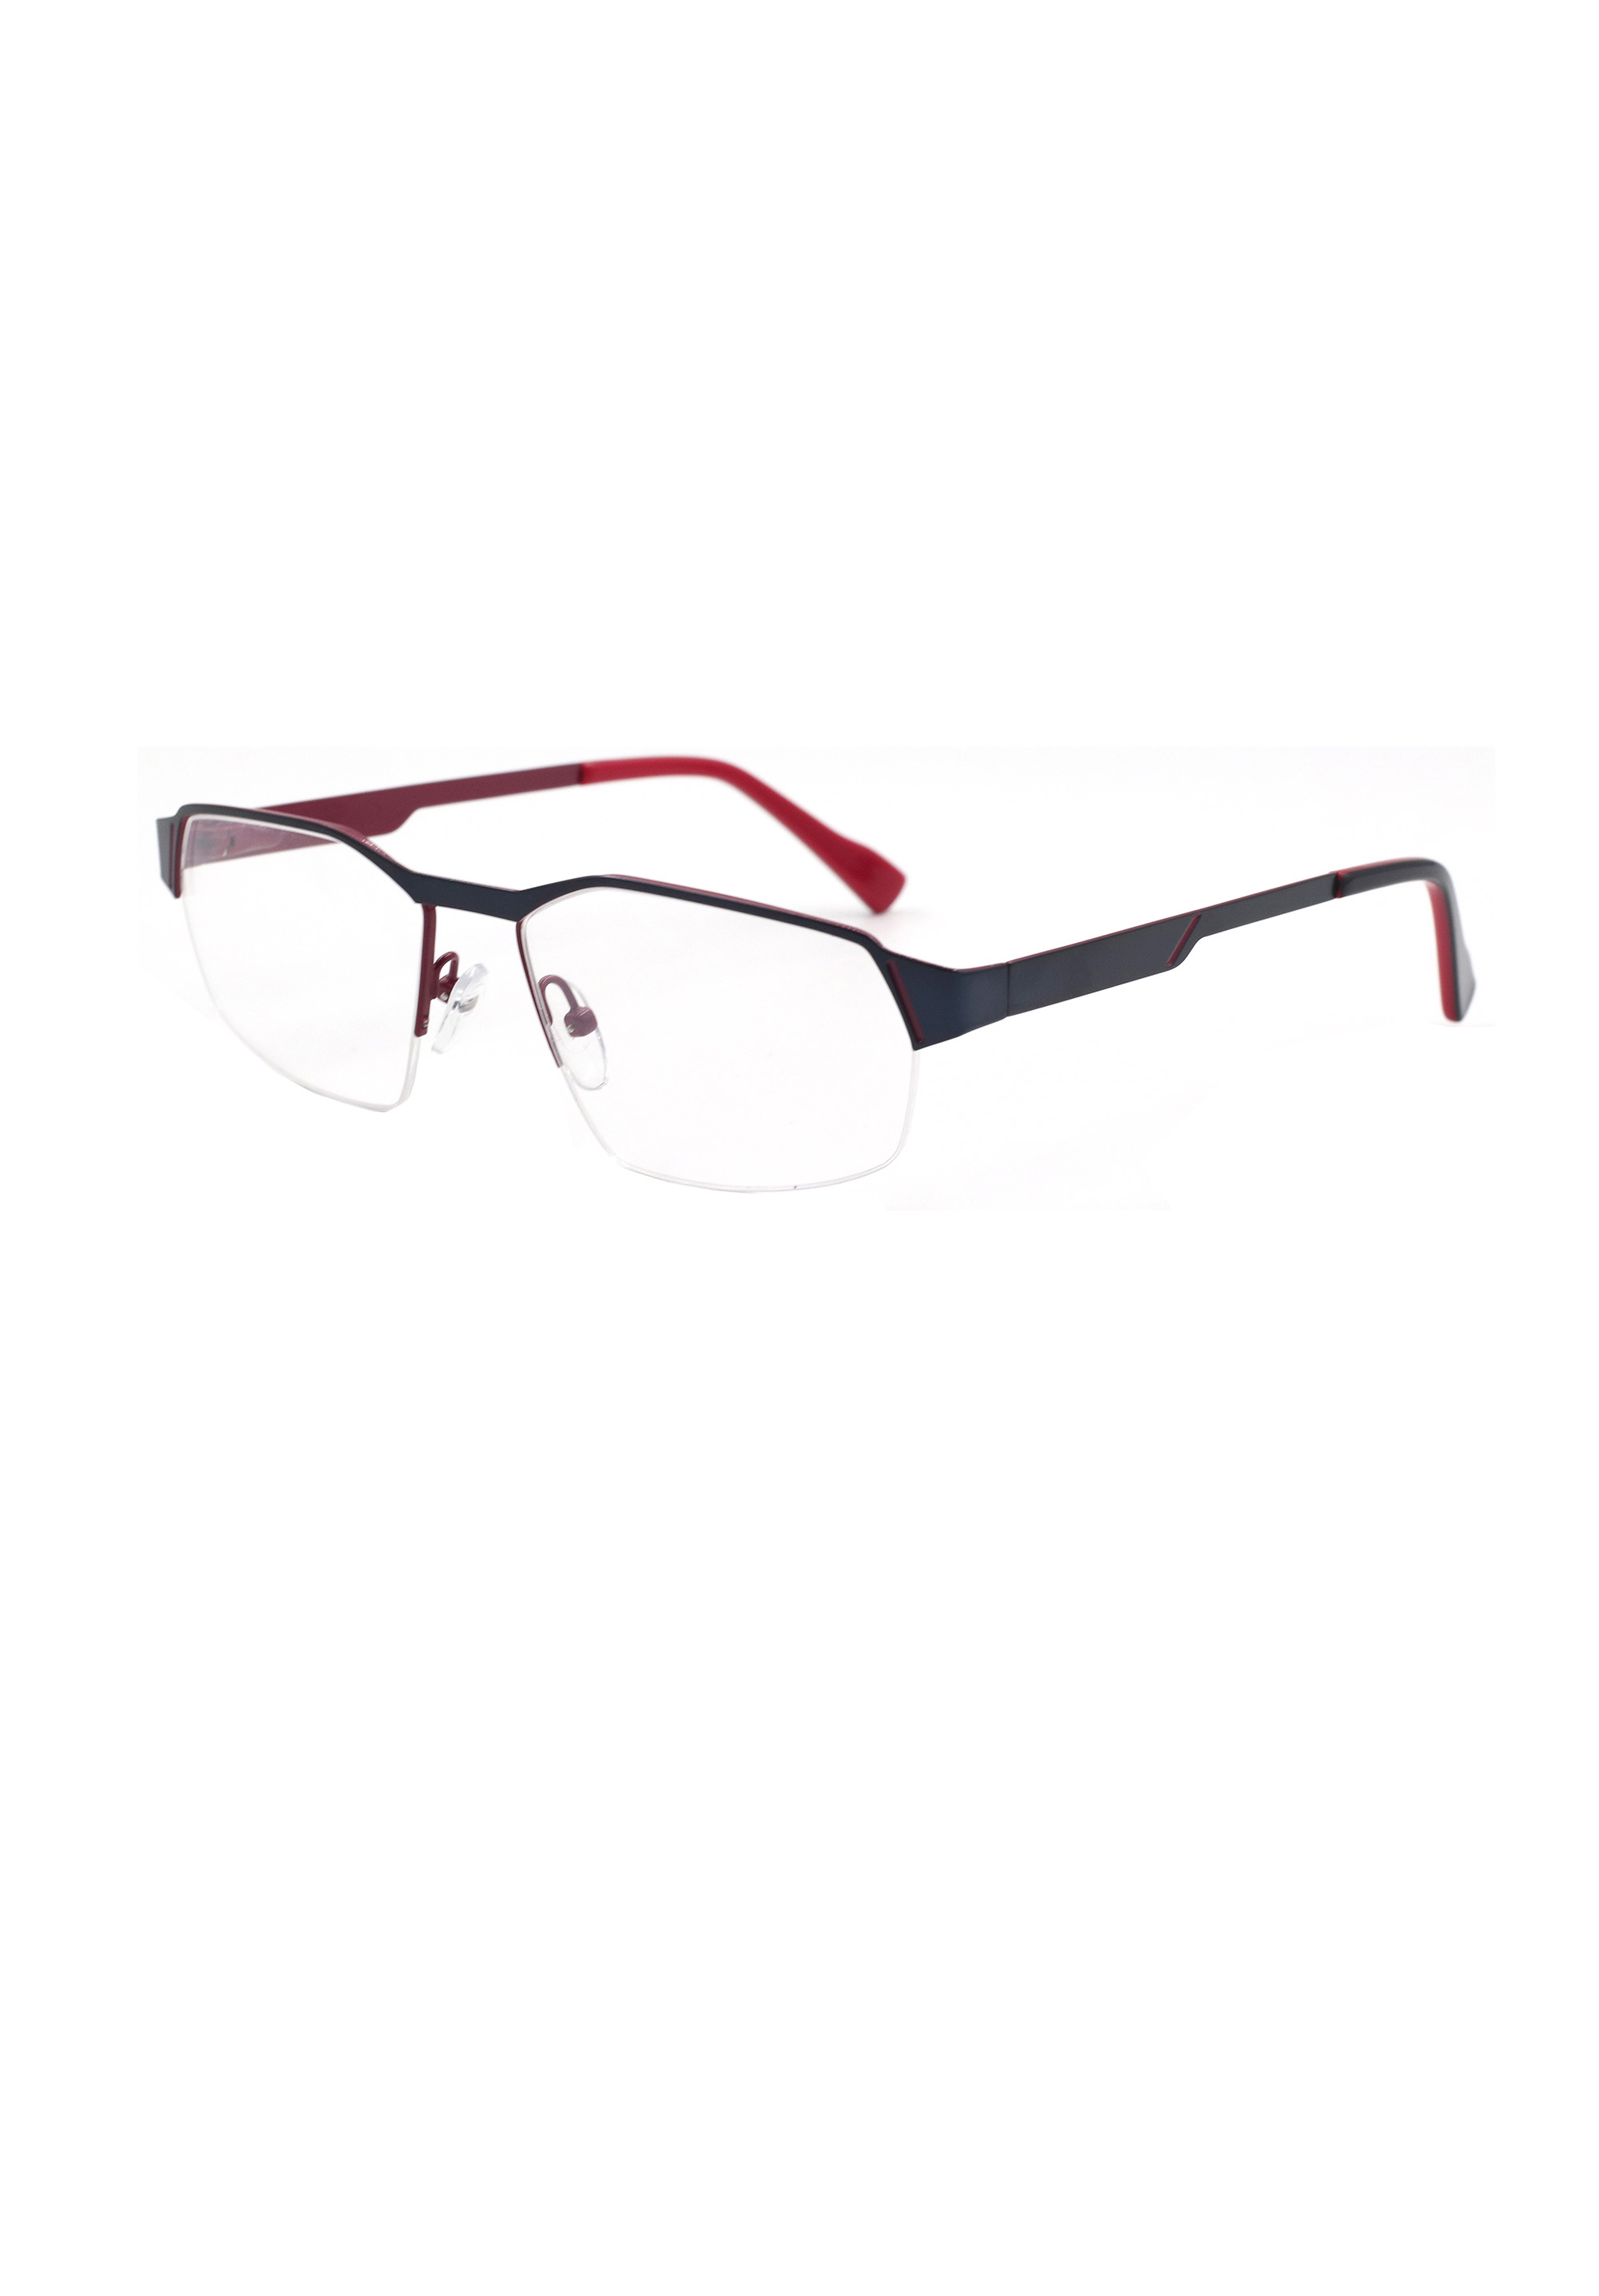 Male fashion optical metal glasses